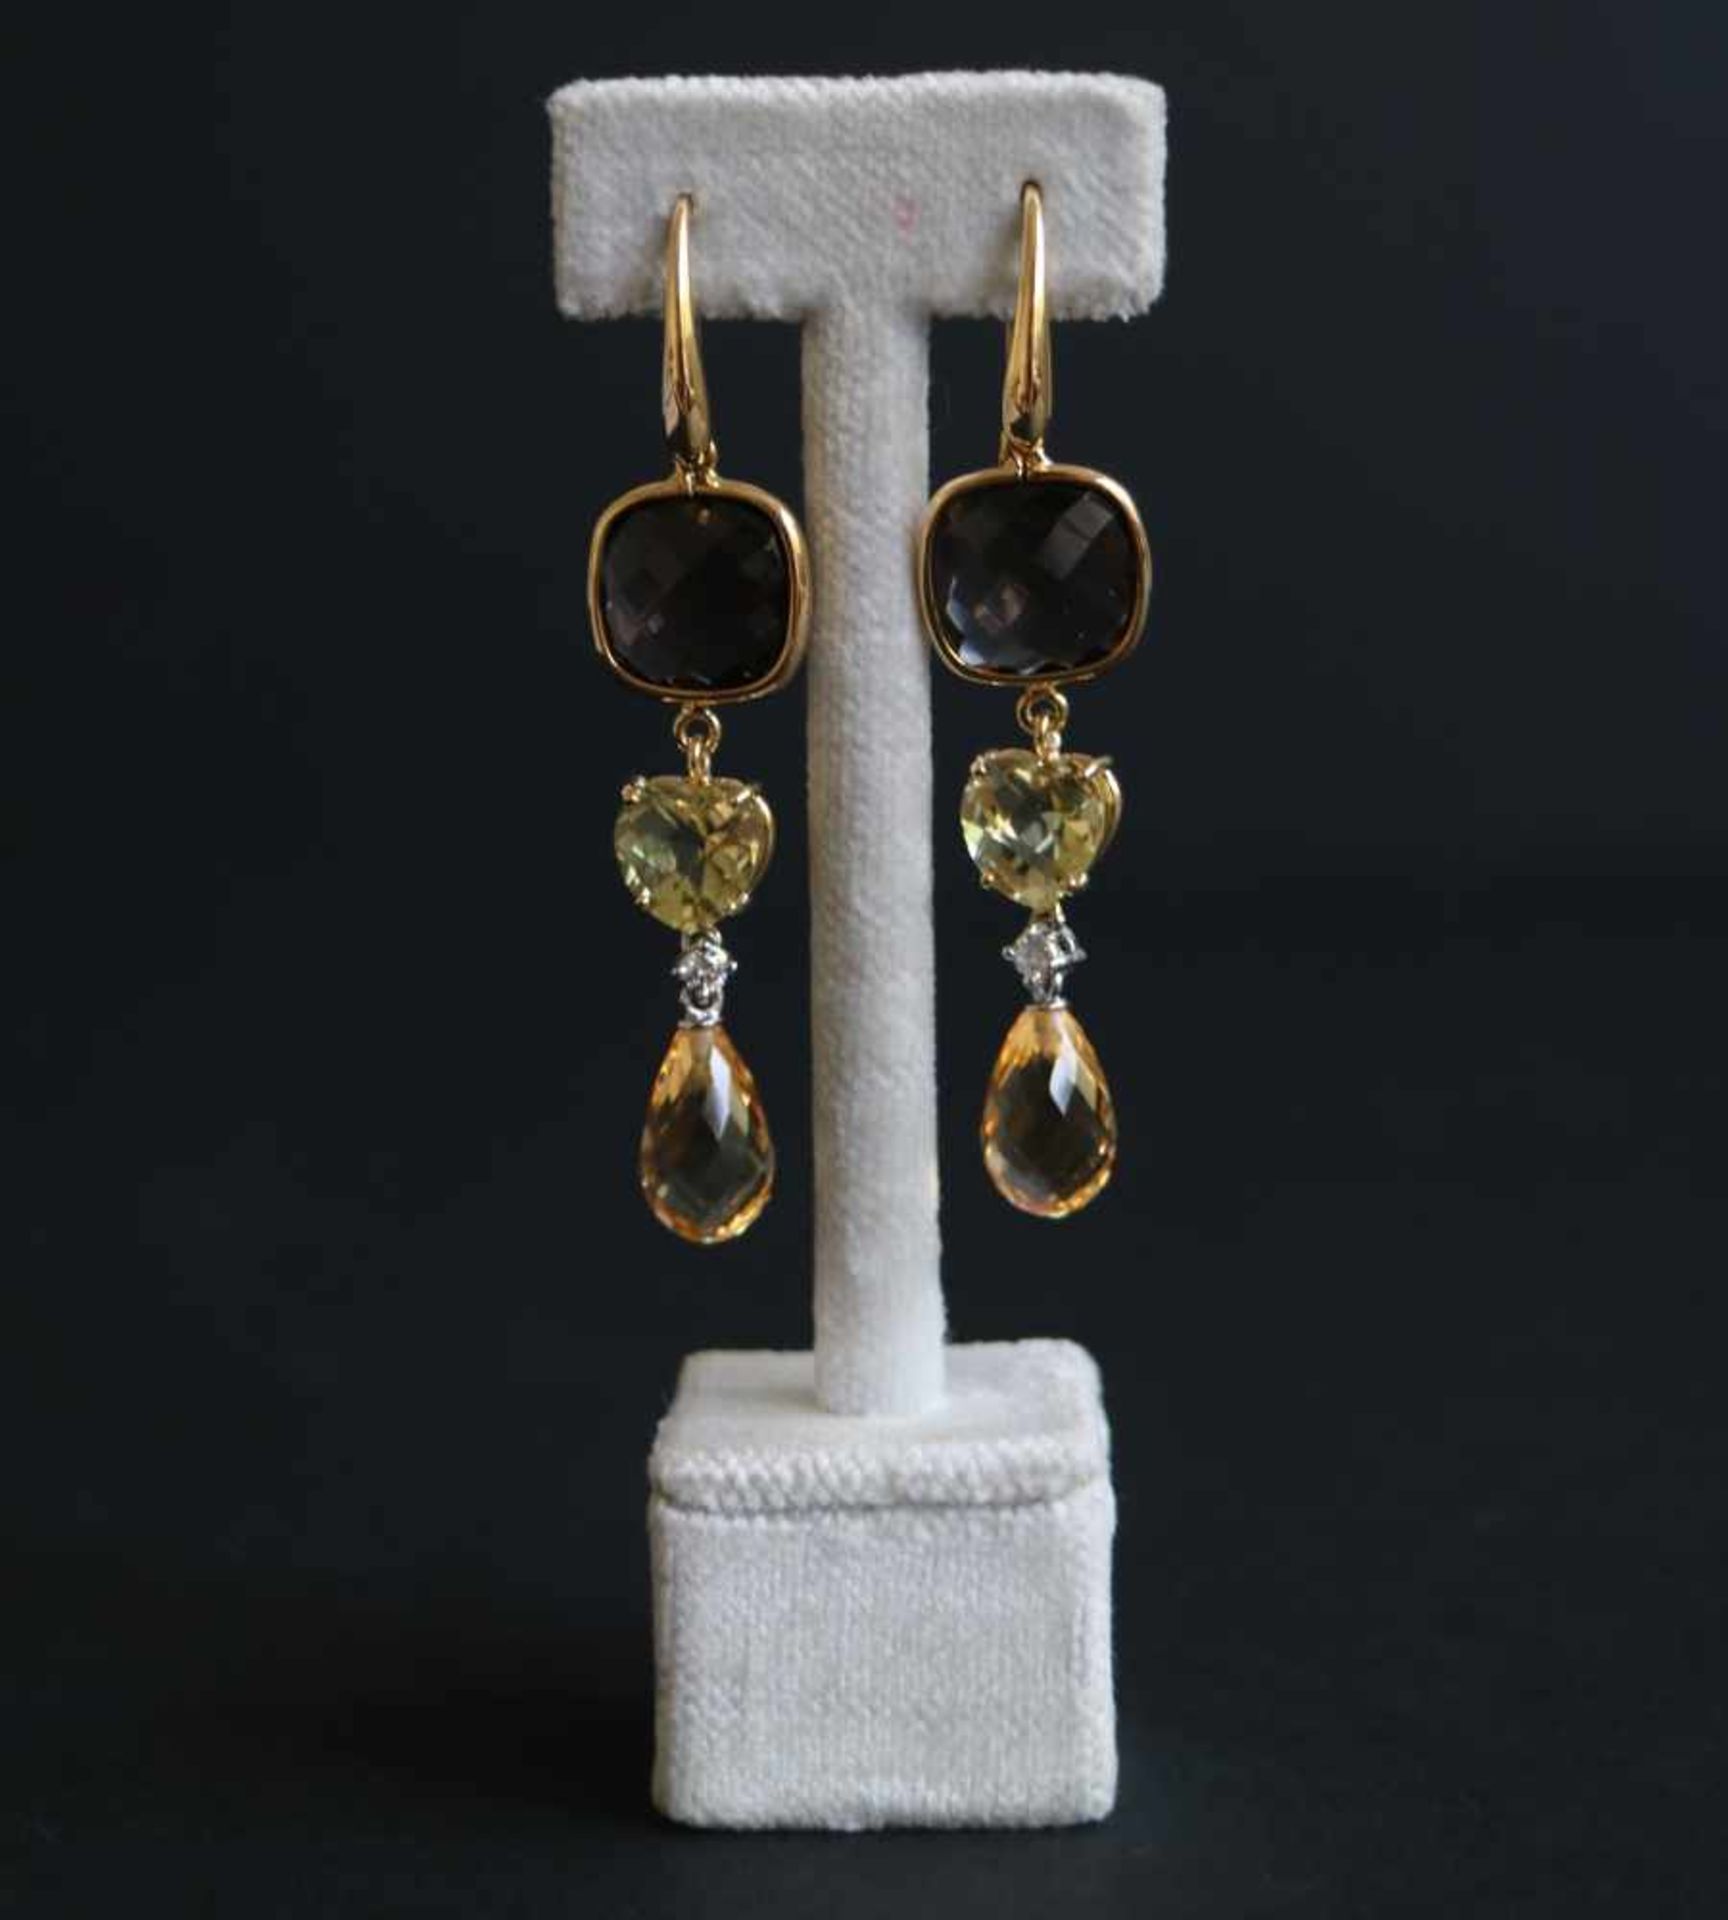 Earrings with diamond and semi-precious stones (smoky quartz and citrine), gold 18 Kt, 2 diamonds